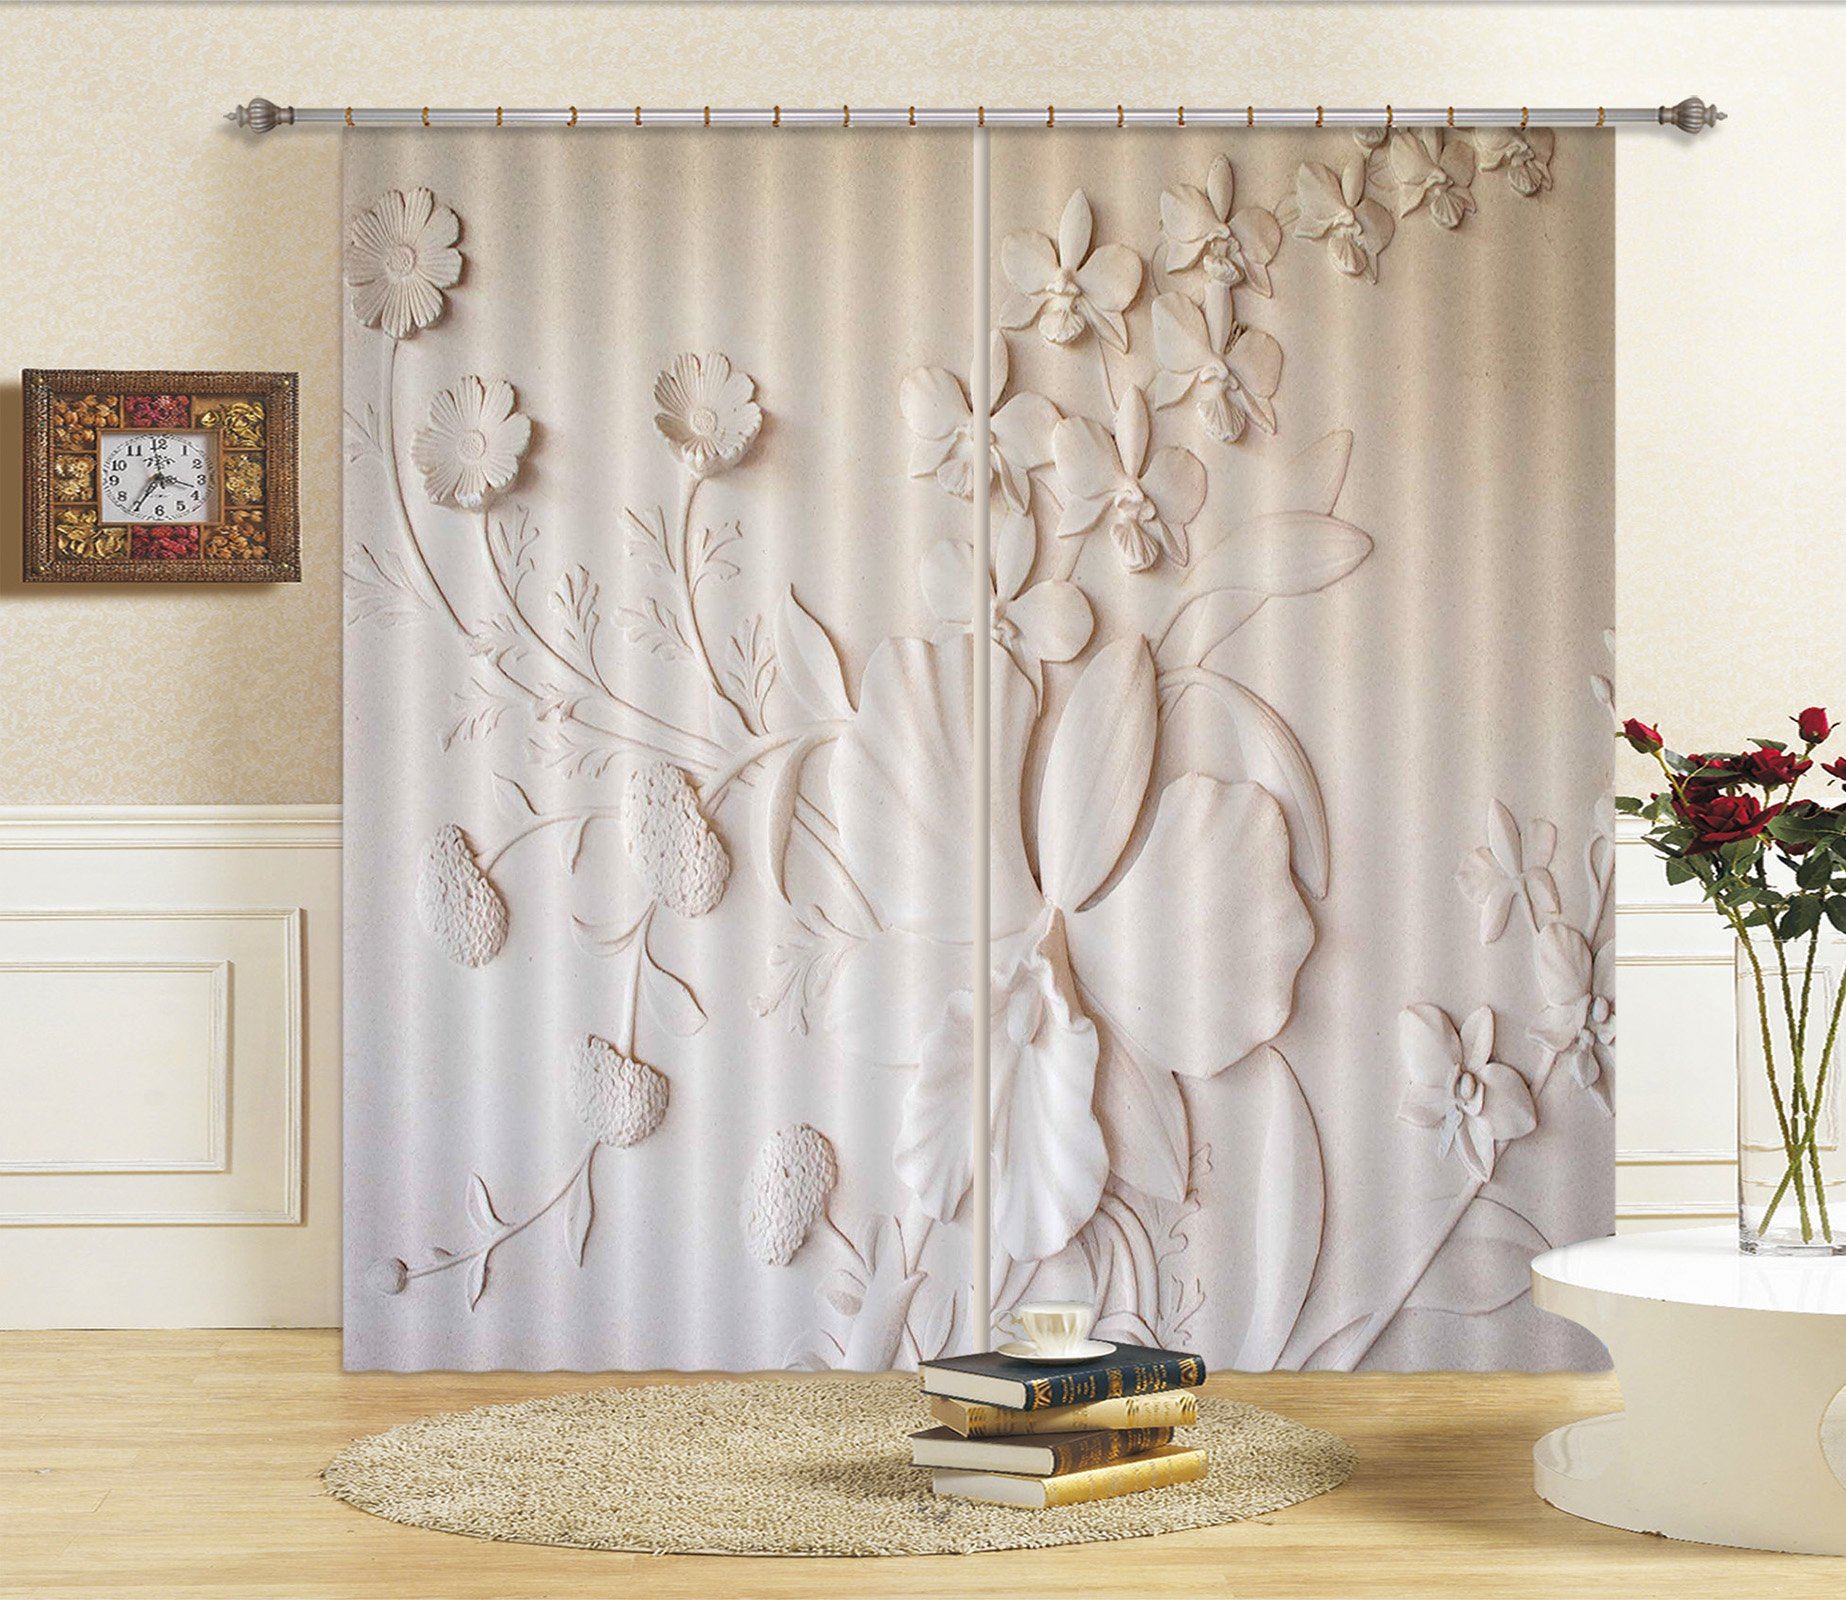 3D Blooming Llily 067 Curtains Drapes Curtains AJ Creativity Home 